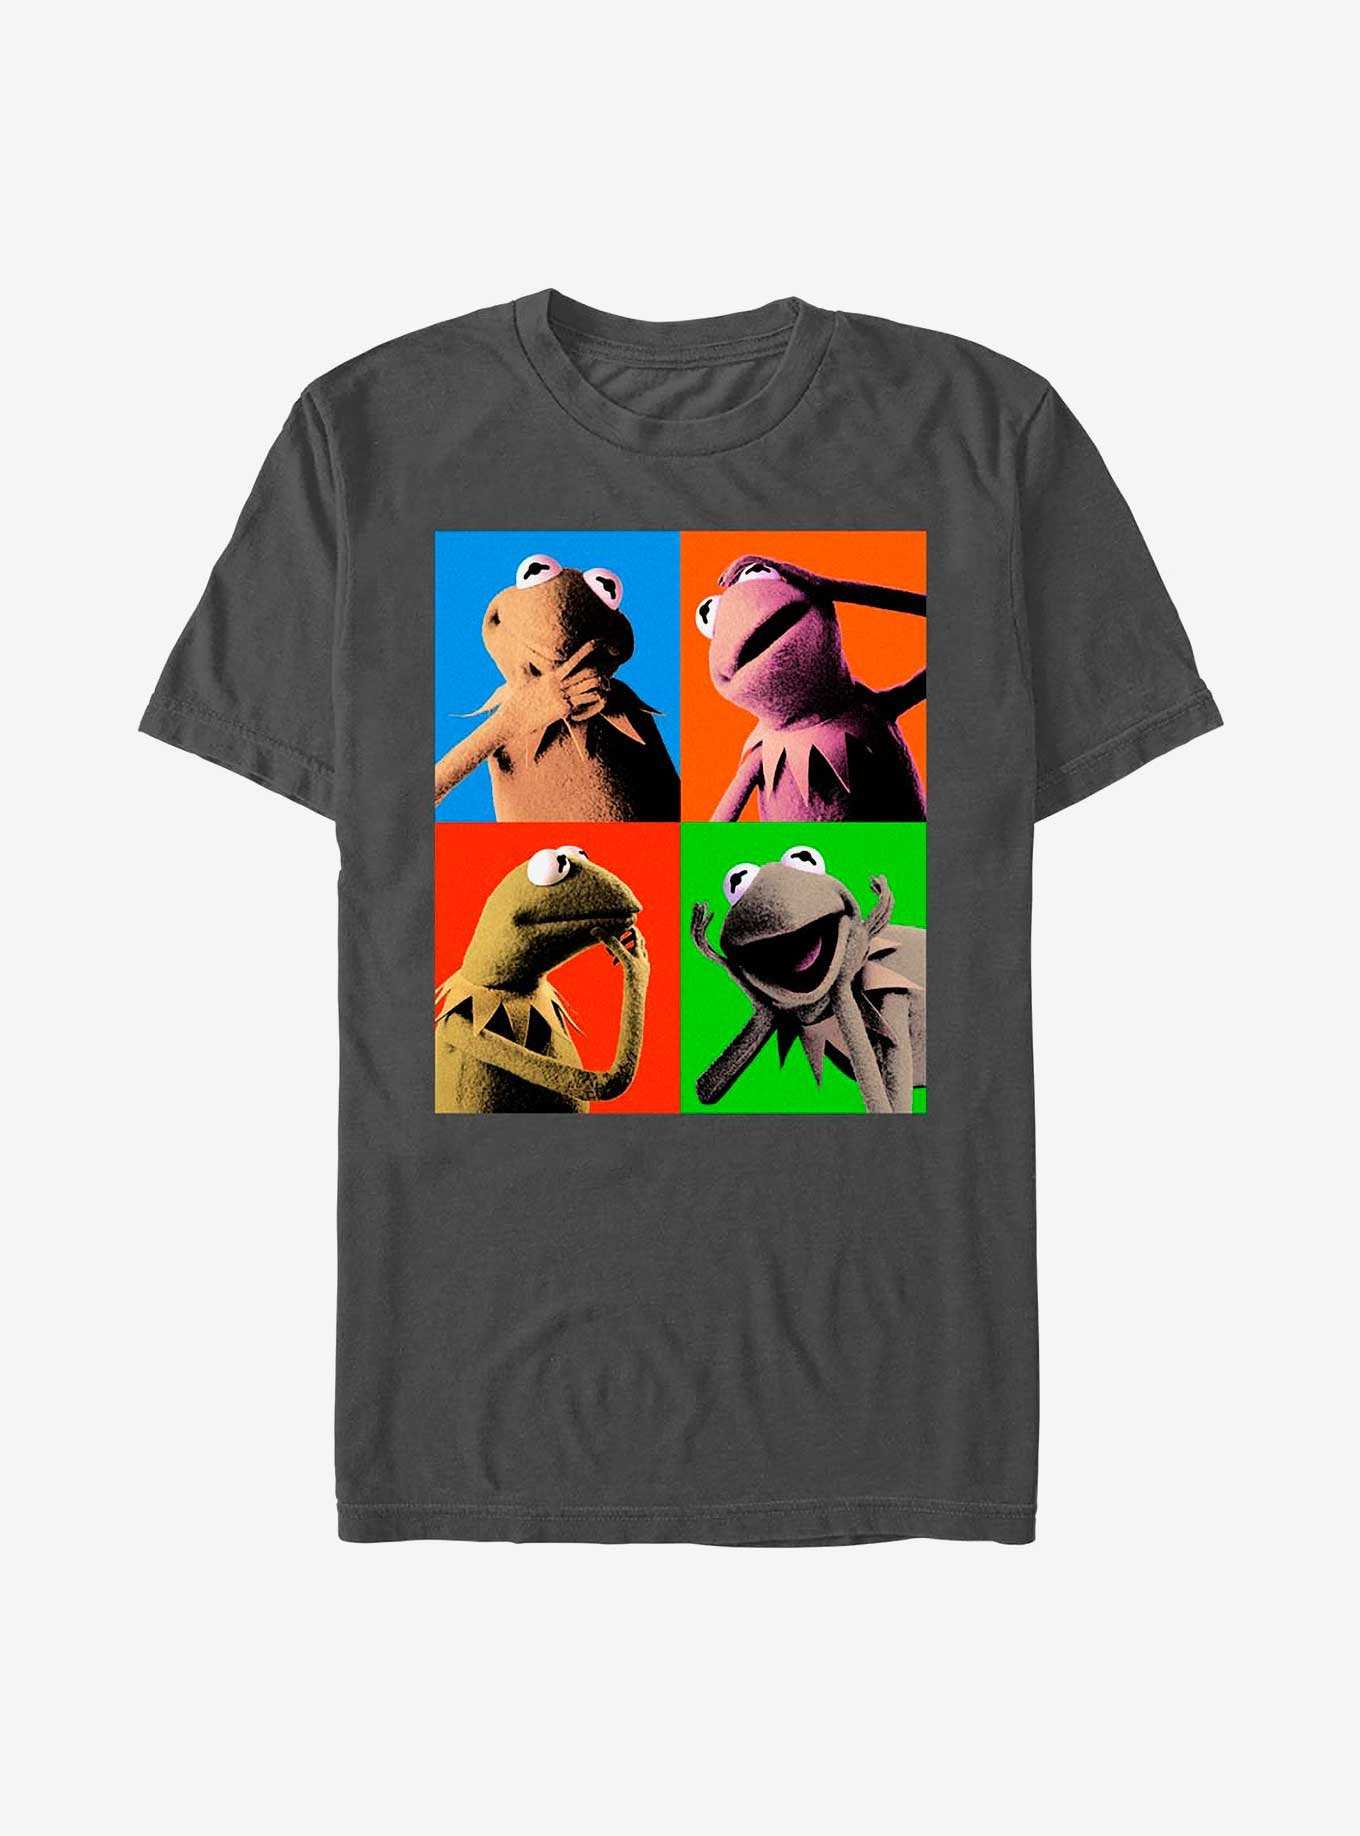 Disney The Muppets Kermit Pop T-Shirt, , hi-res